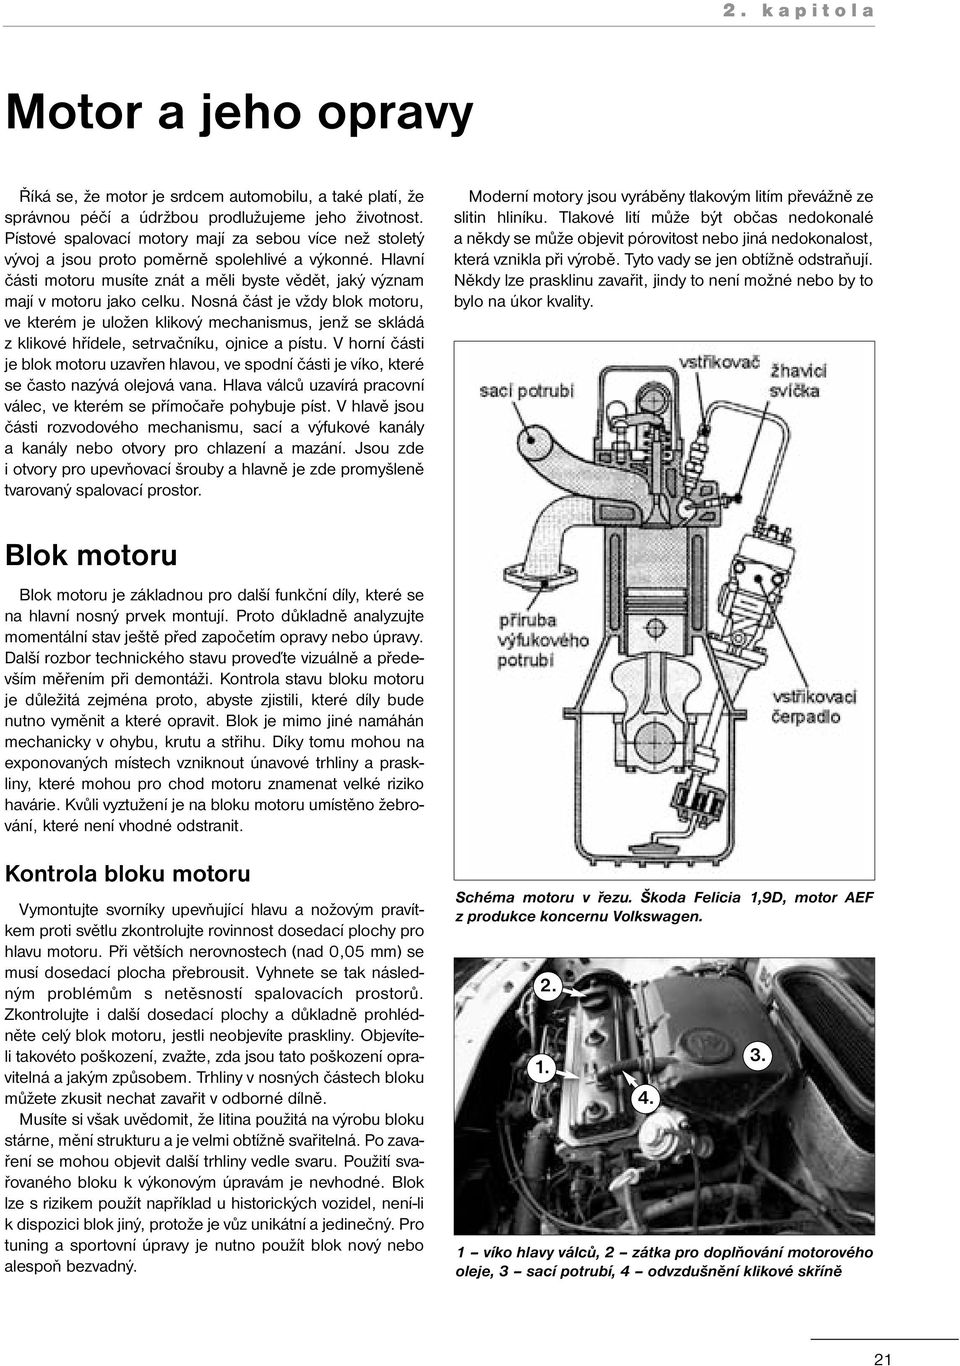 Motor a jeho opravy. Blok motoru. Kontrola bloku motoru. 2. kapitola PDF  Free Download